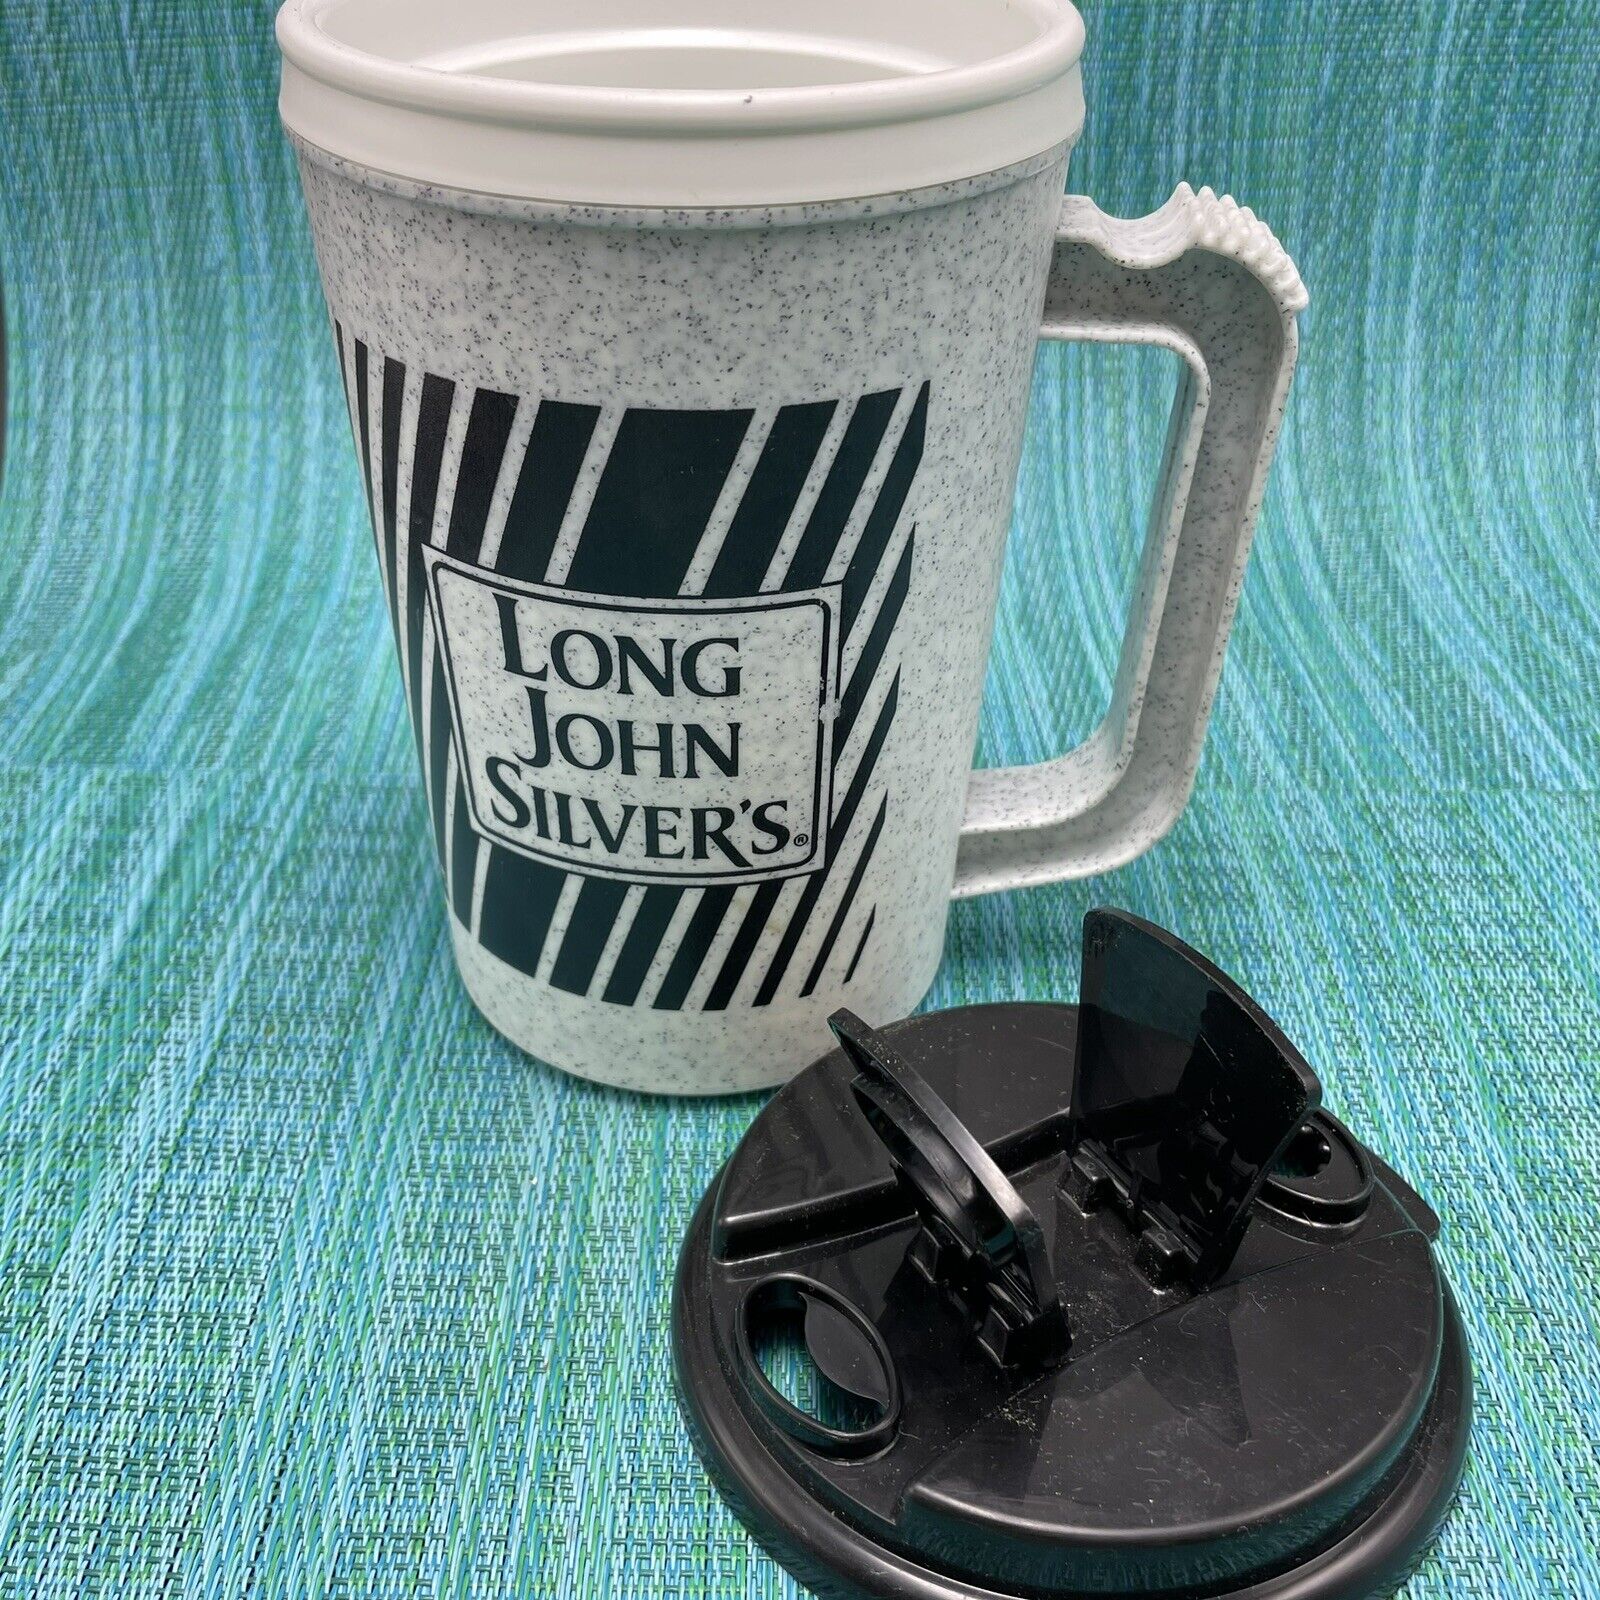 Vintage Long John Silvers Travel Mug 22 oz Insulated Cup Large - Black